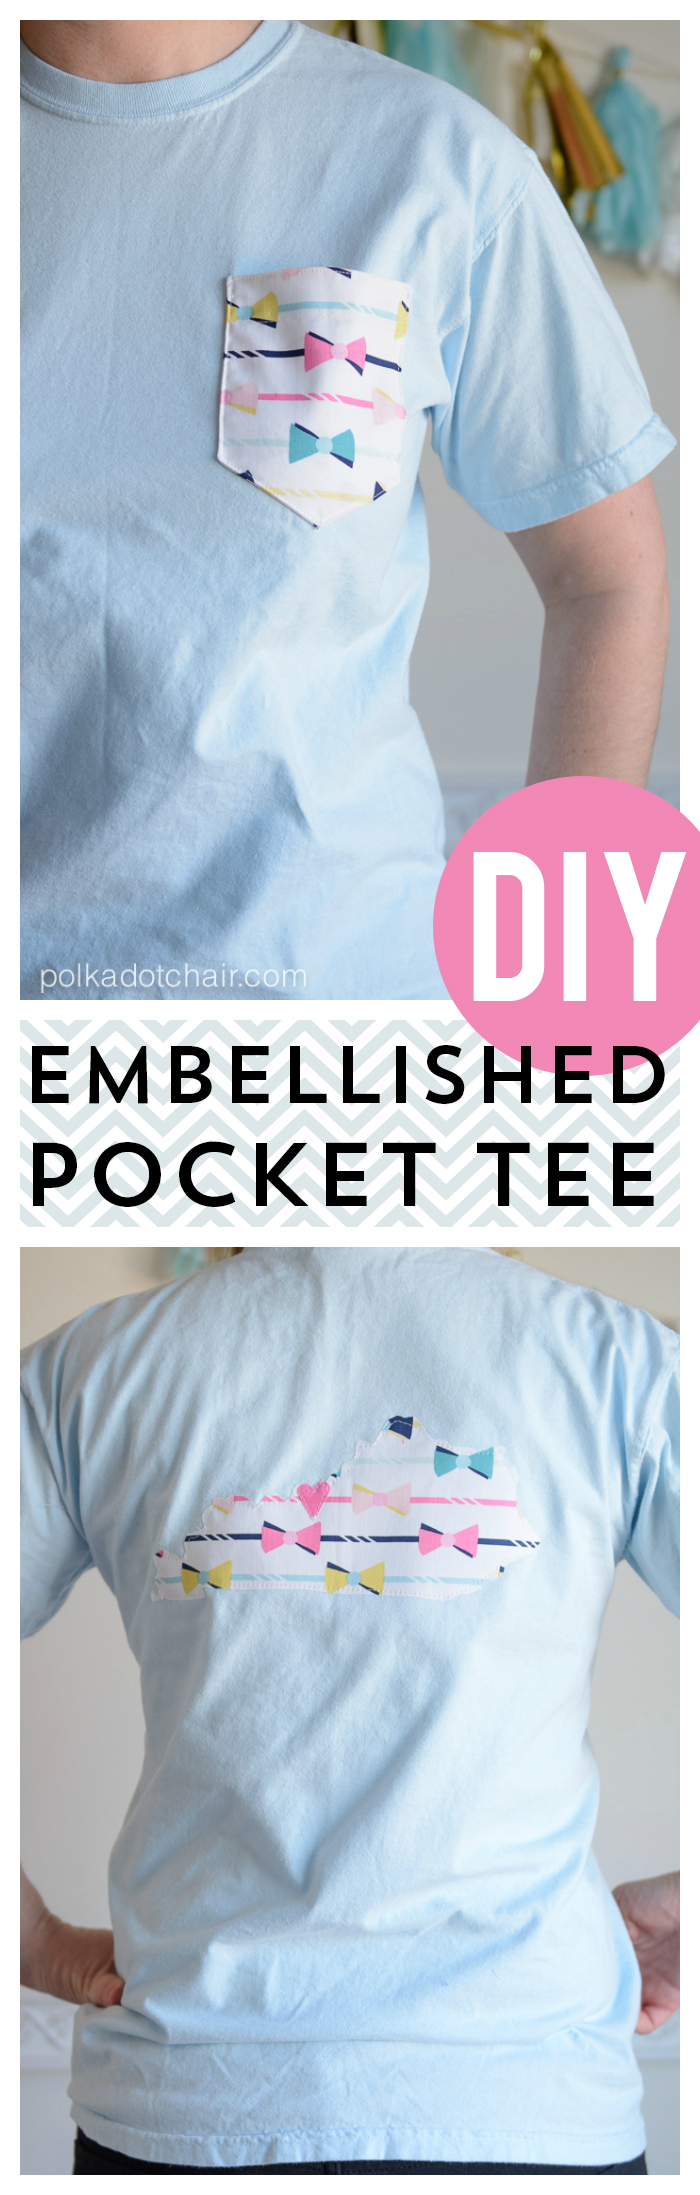 A fun way to dress up a plain t-shirt- How to make a pocket t-shirt